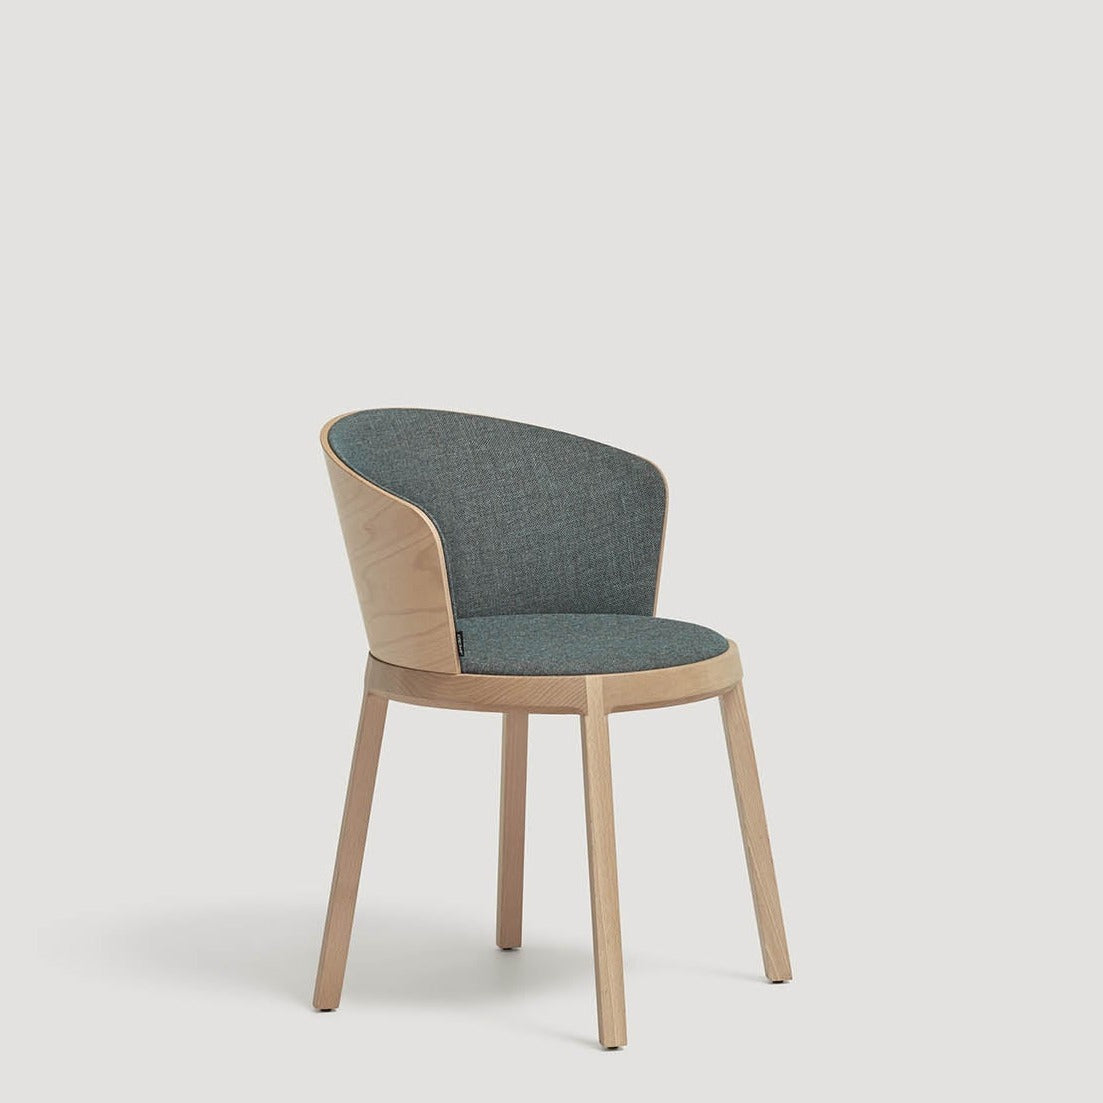 SILLA ARO Chair natural base, wooden backrest